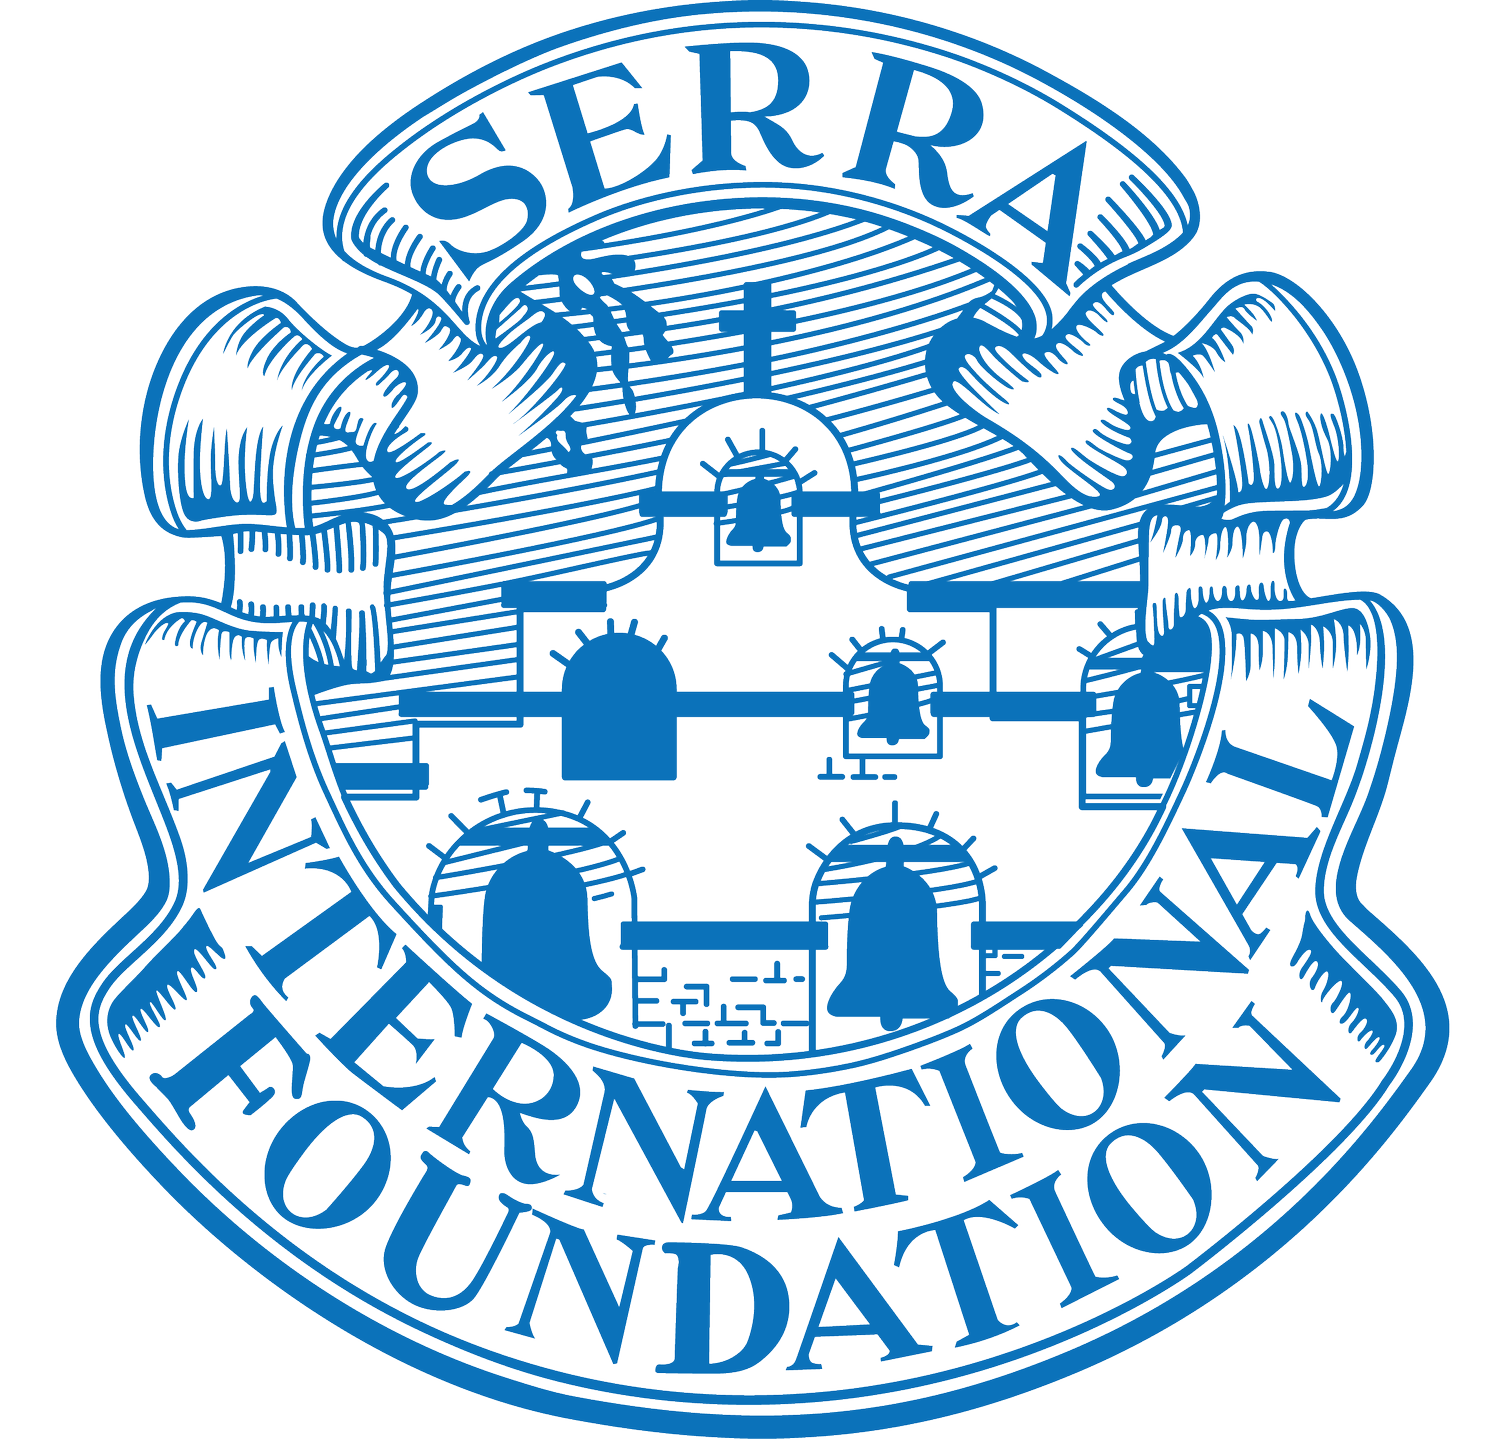 The Serra International Foundation